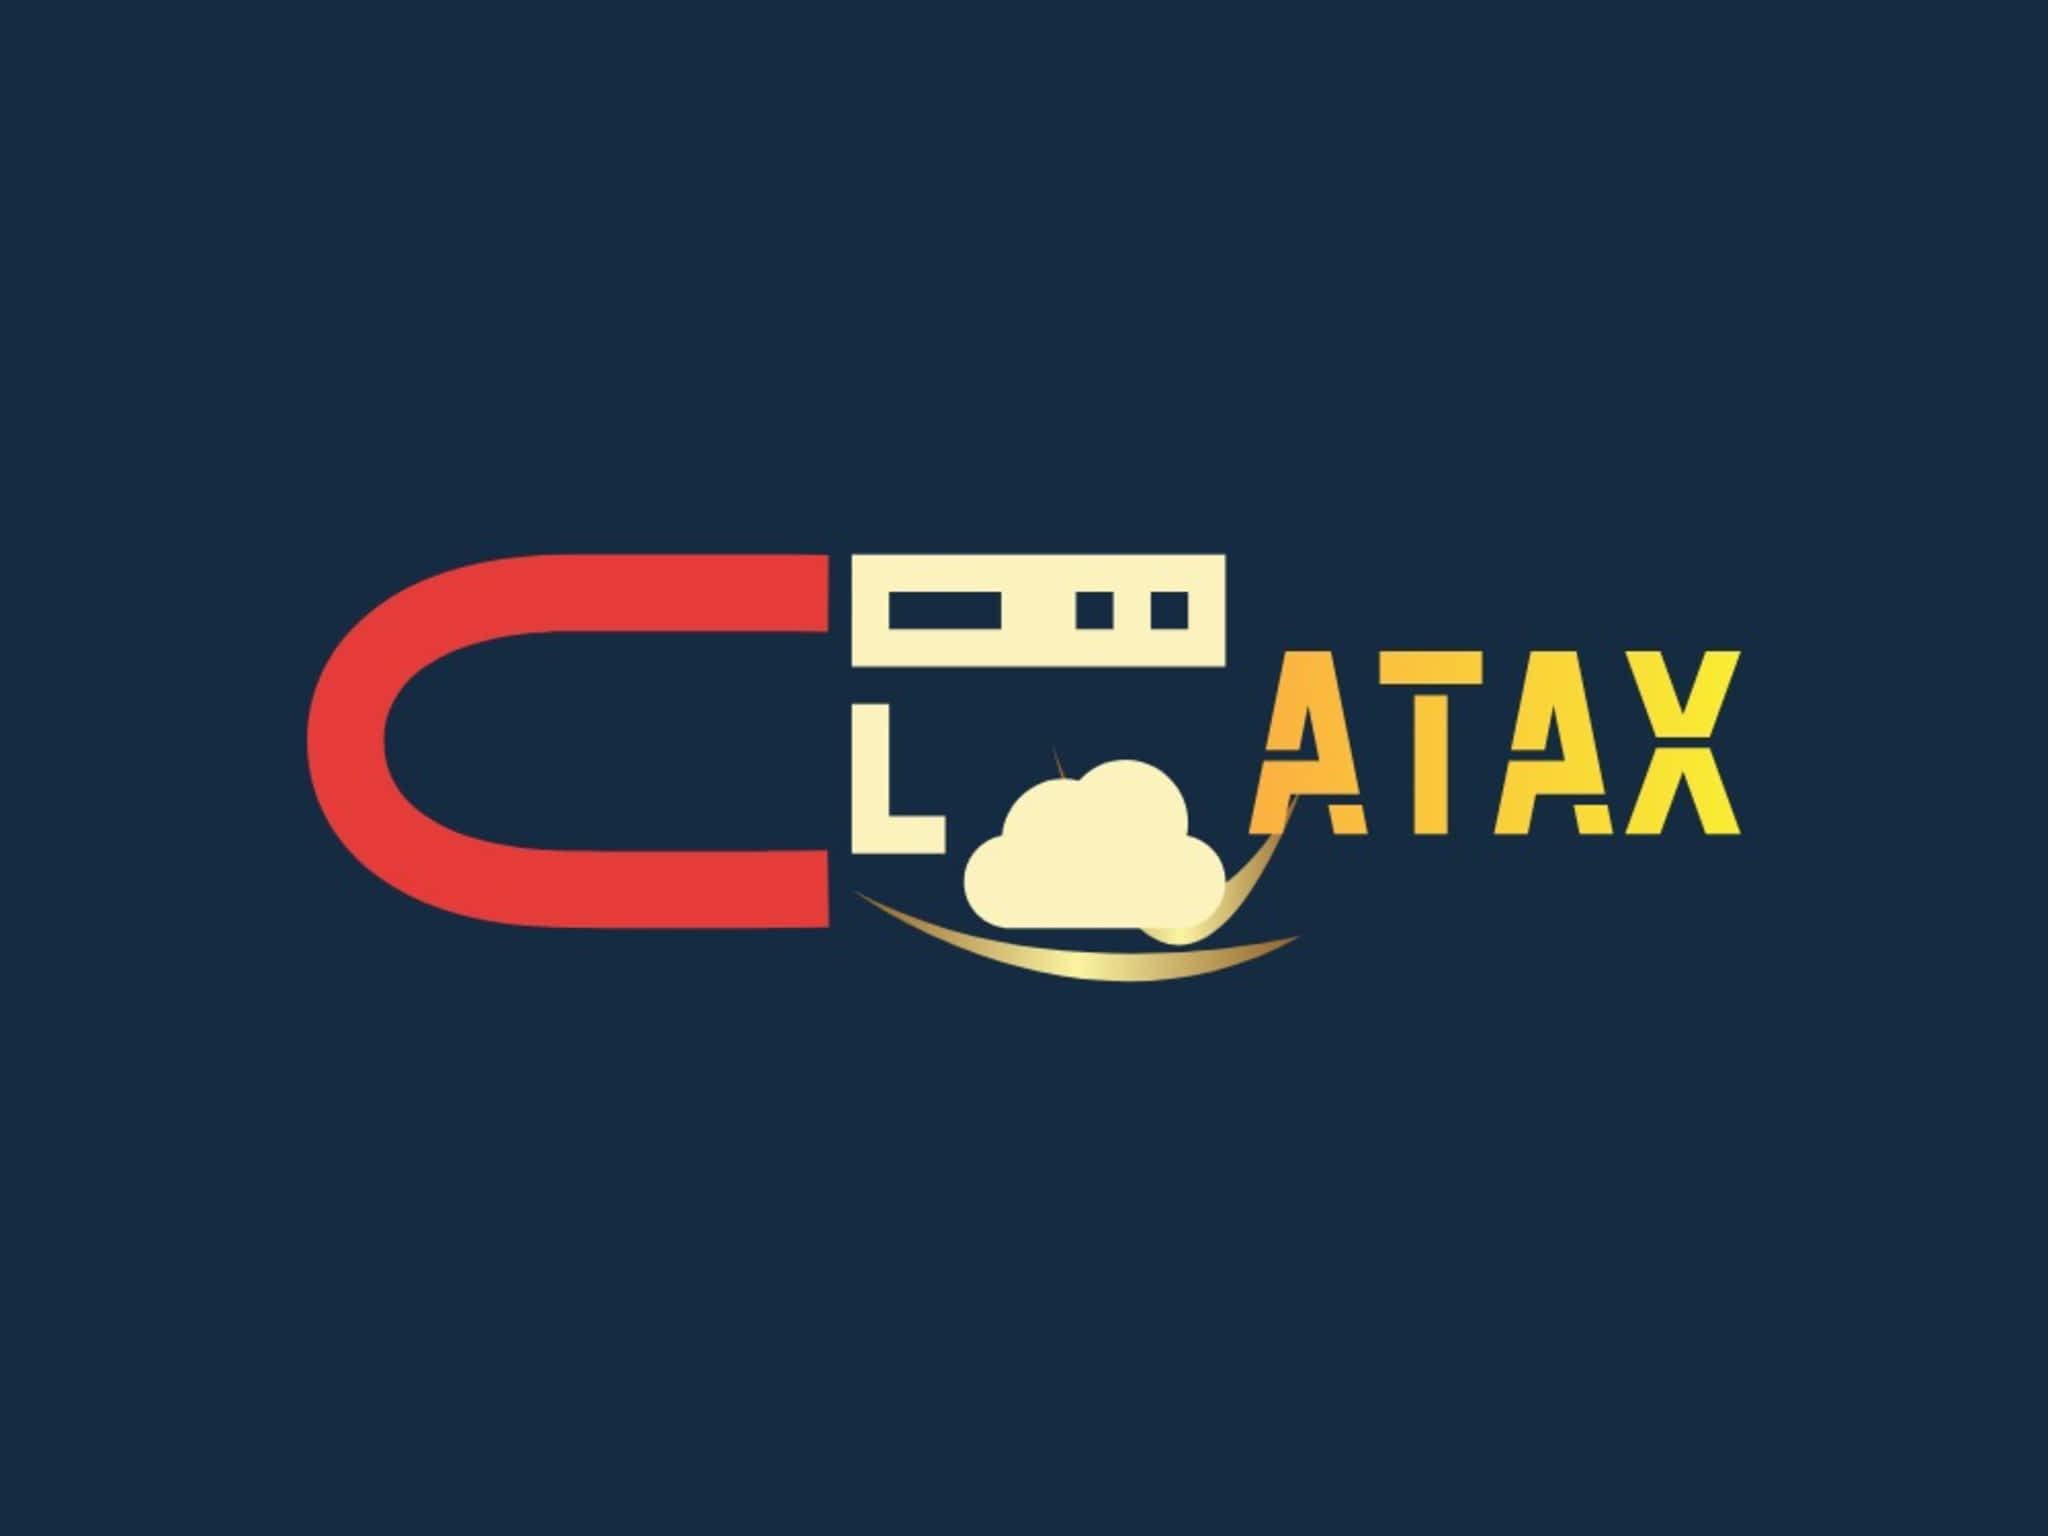 photo Cloud Accounting & Tax Services Inc. | CLaTAX